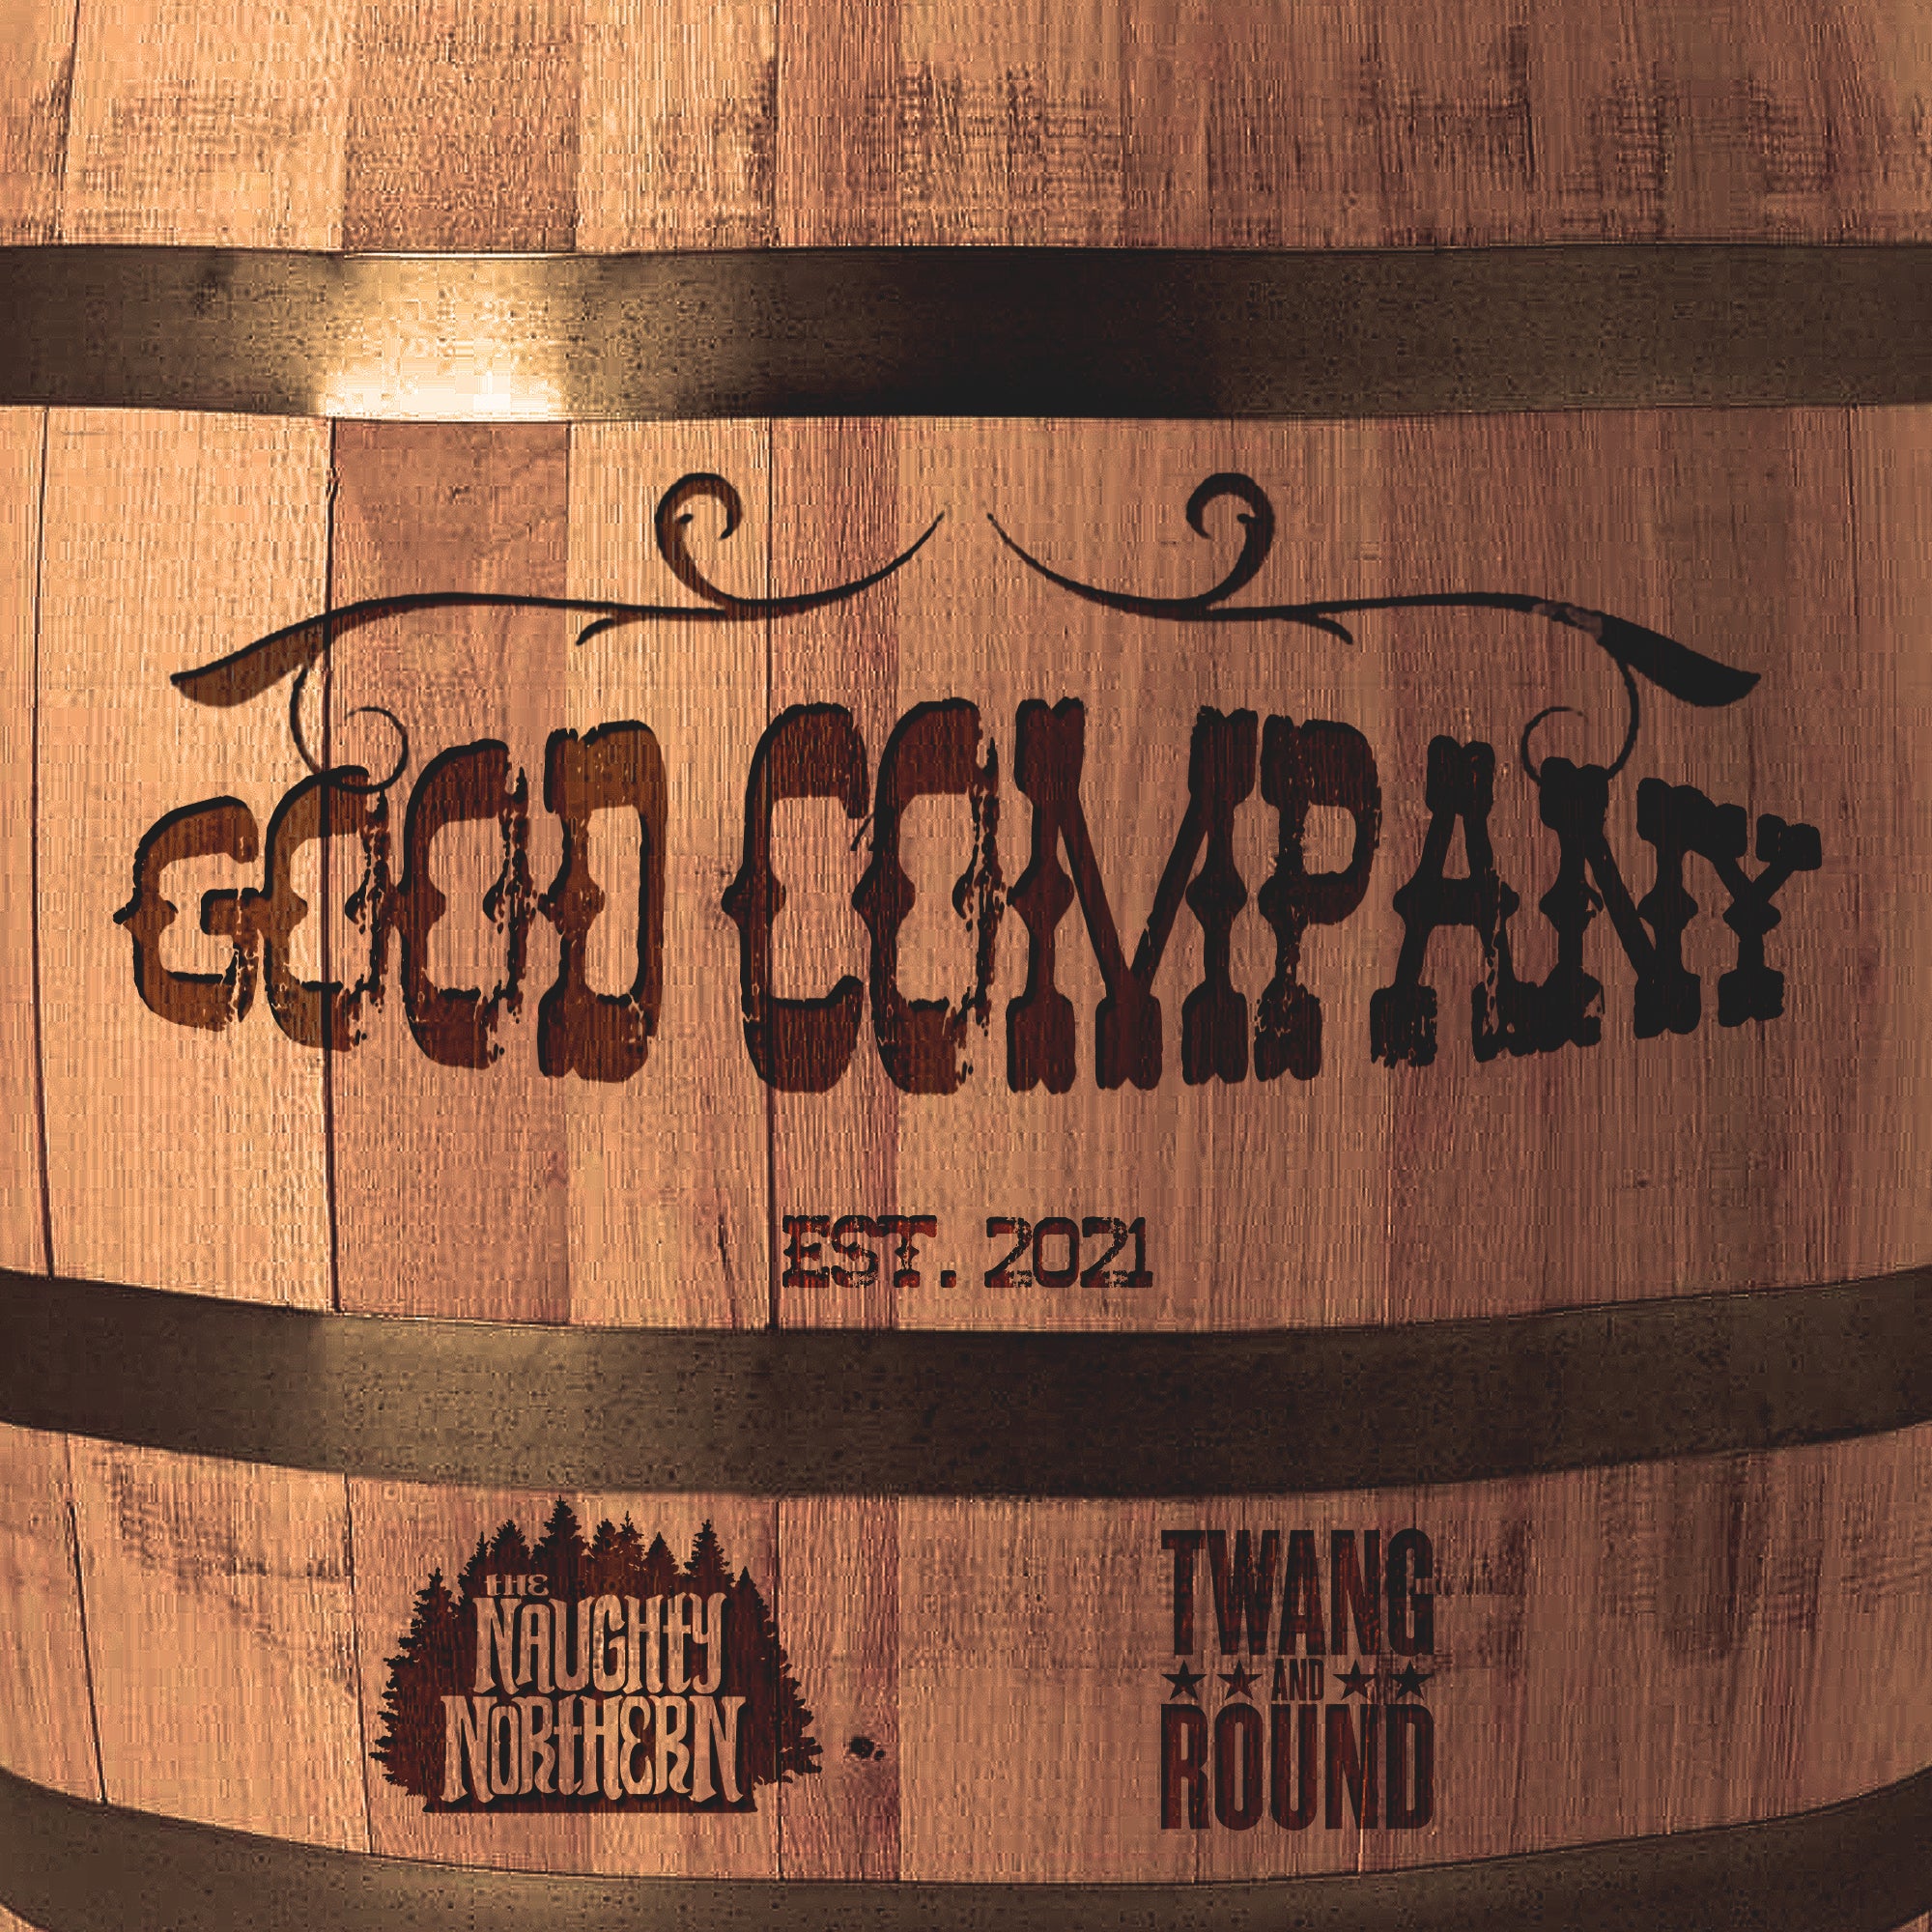 "Good Company" - The Naughty Northern X Twang & Round CD